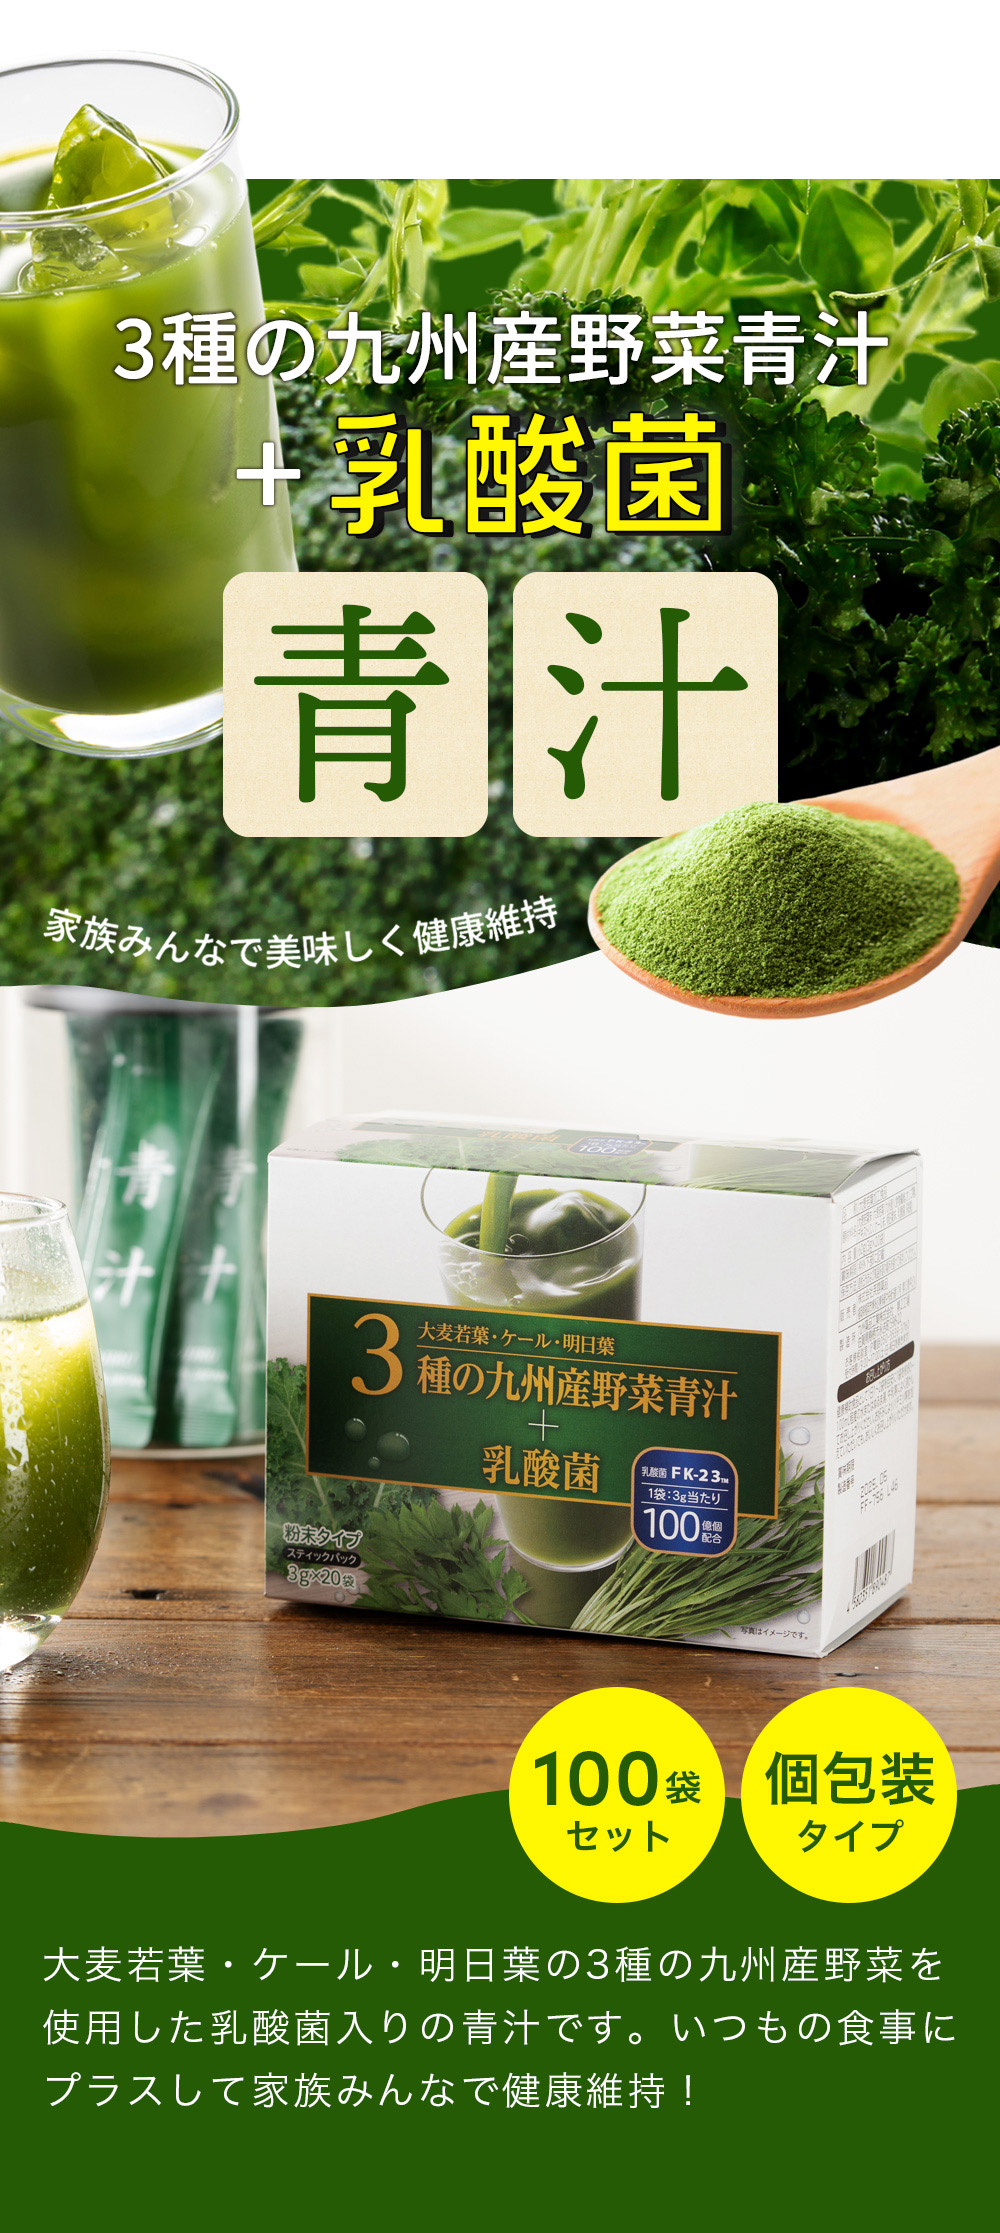 青汁 乳酸菌 粉末タイプ 送料無料 3種の九州産野菜青汁＋乳酸菌 3g×20 